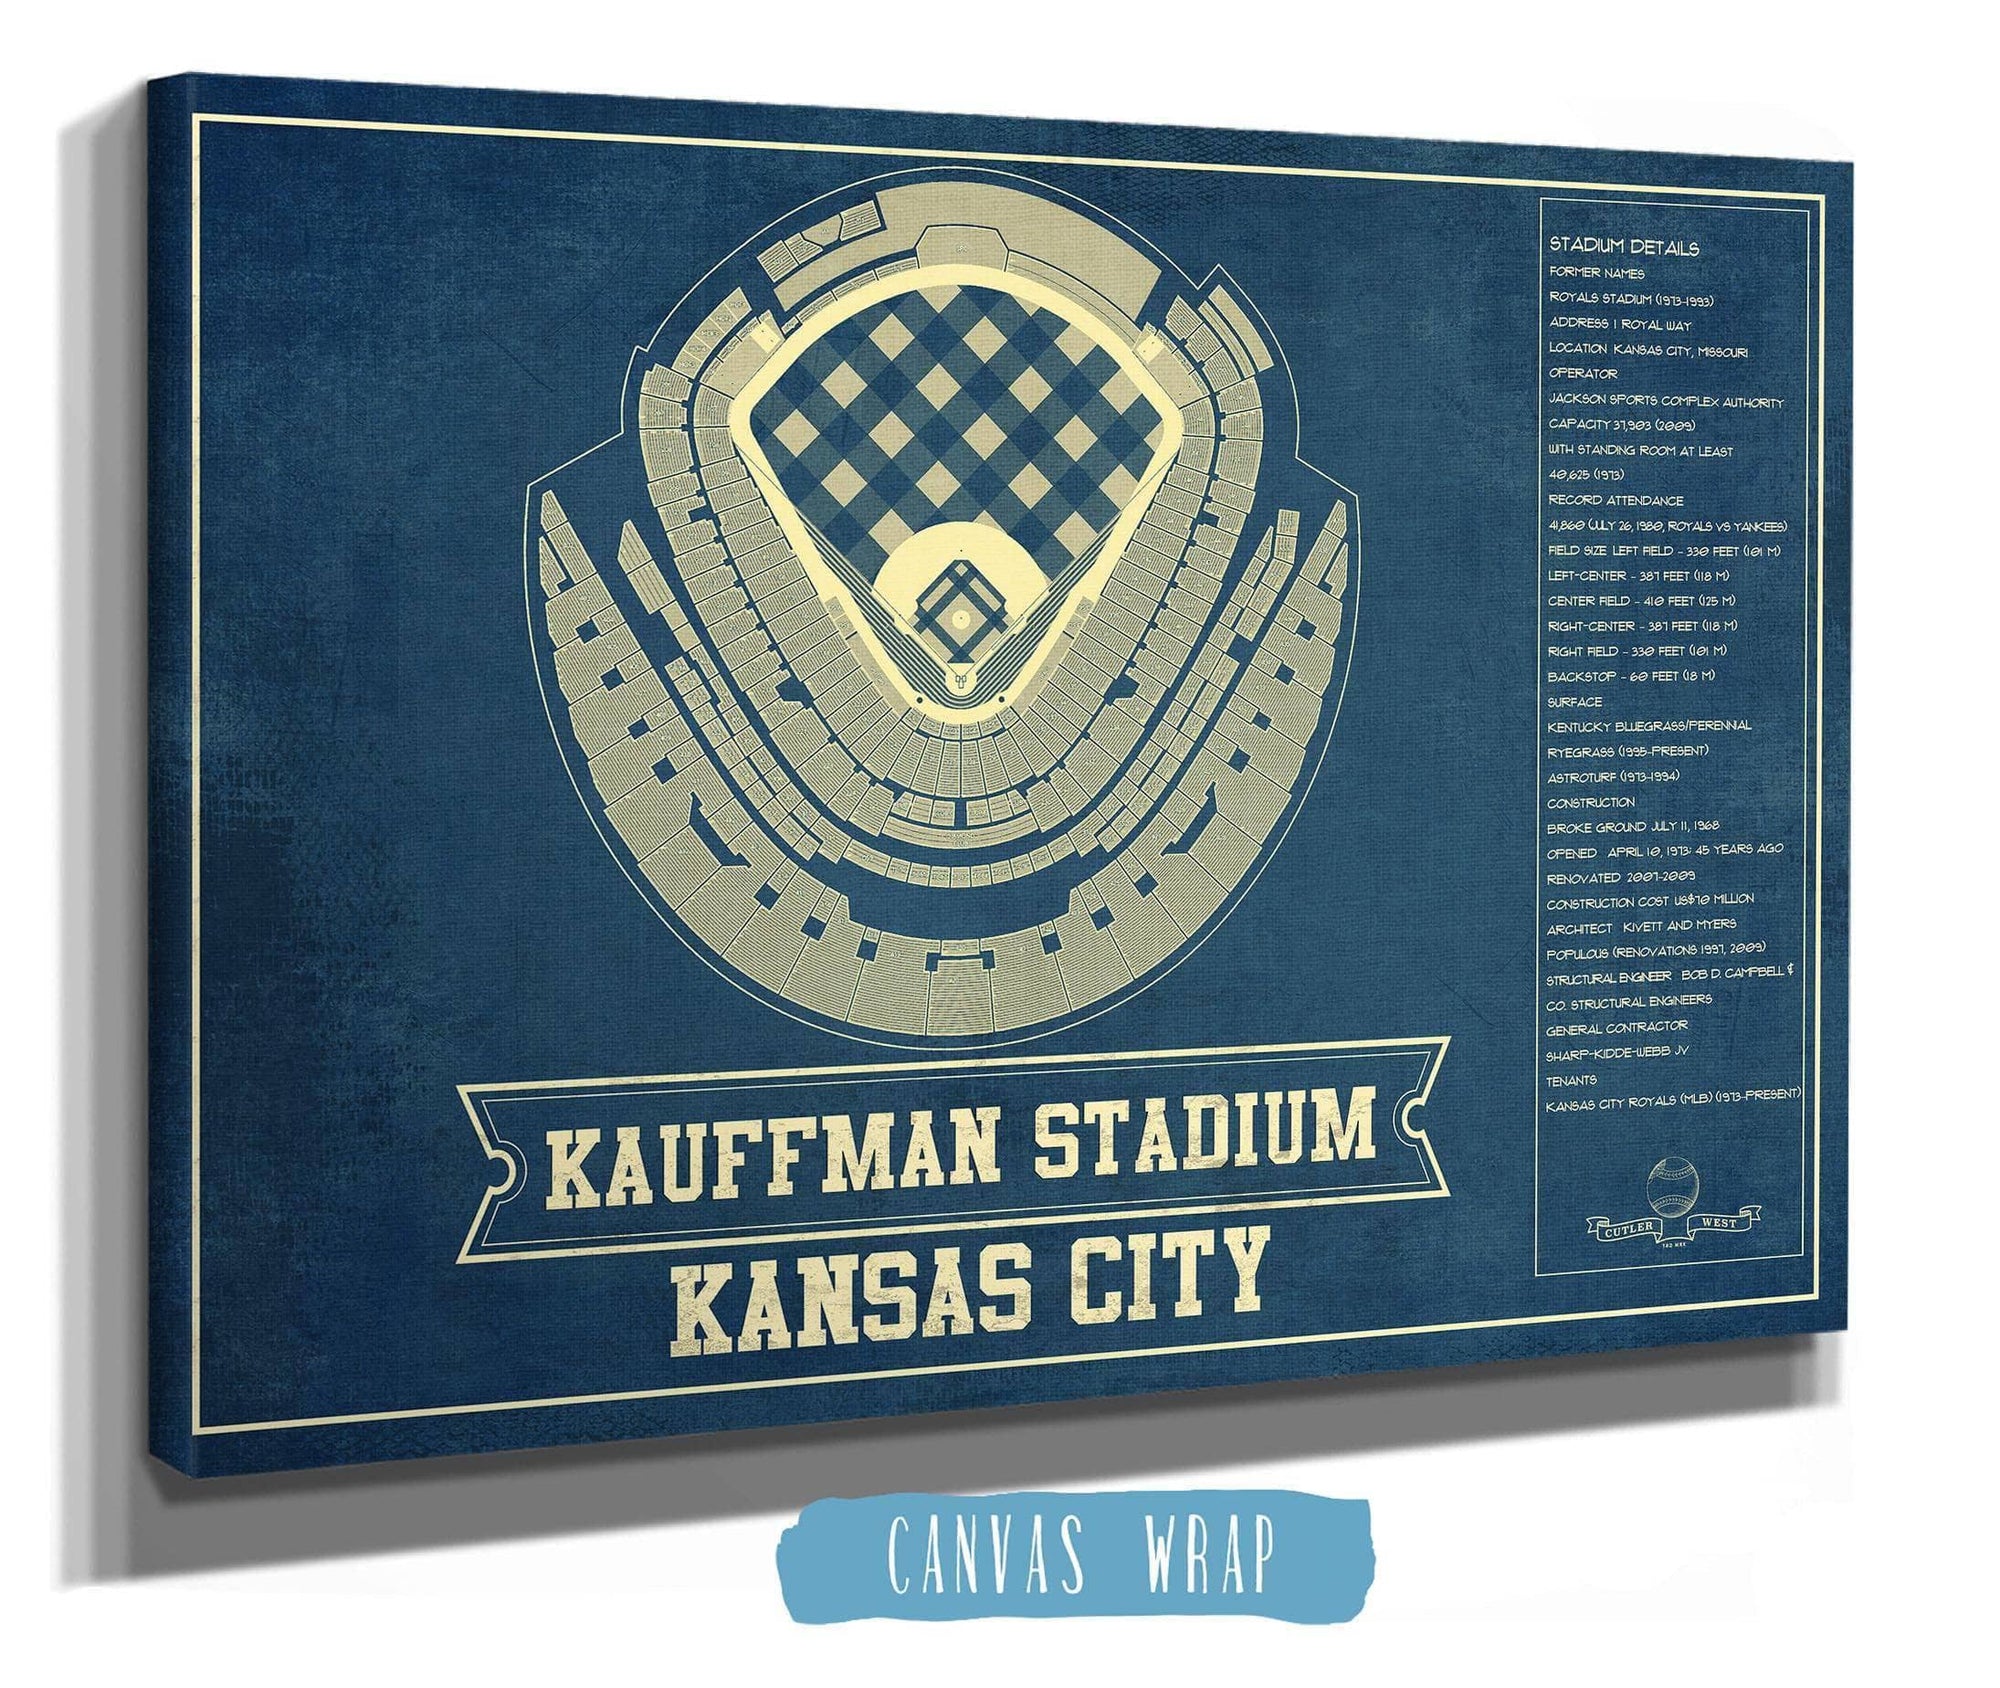 Kansas City Royals/Kauffman Stadium Wall Mural, Sky Box Sports Scenes